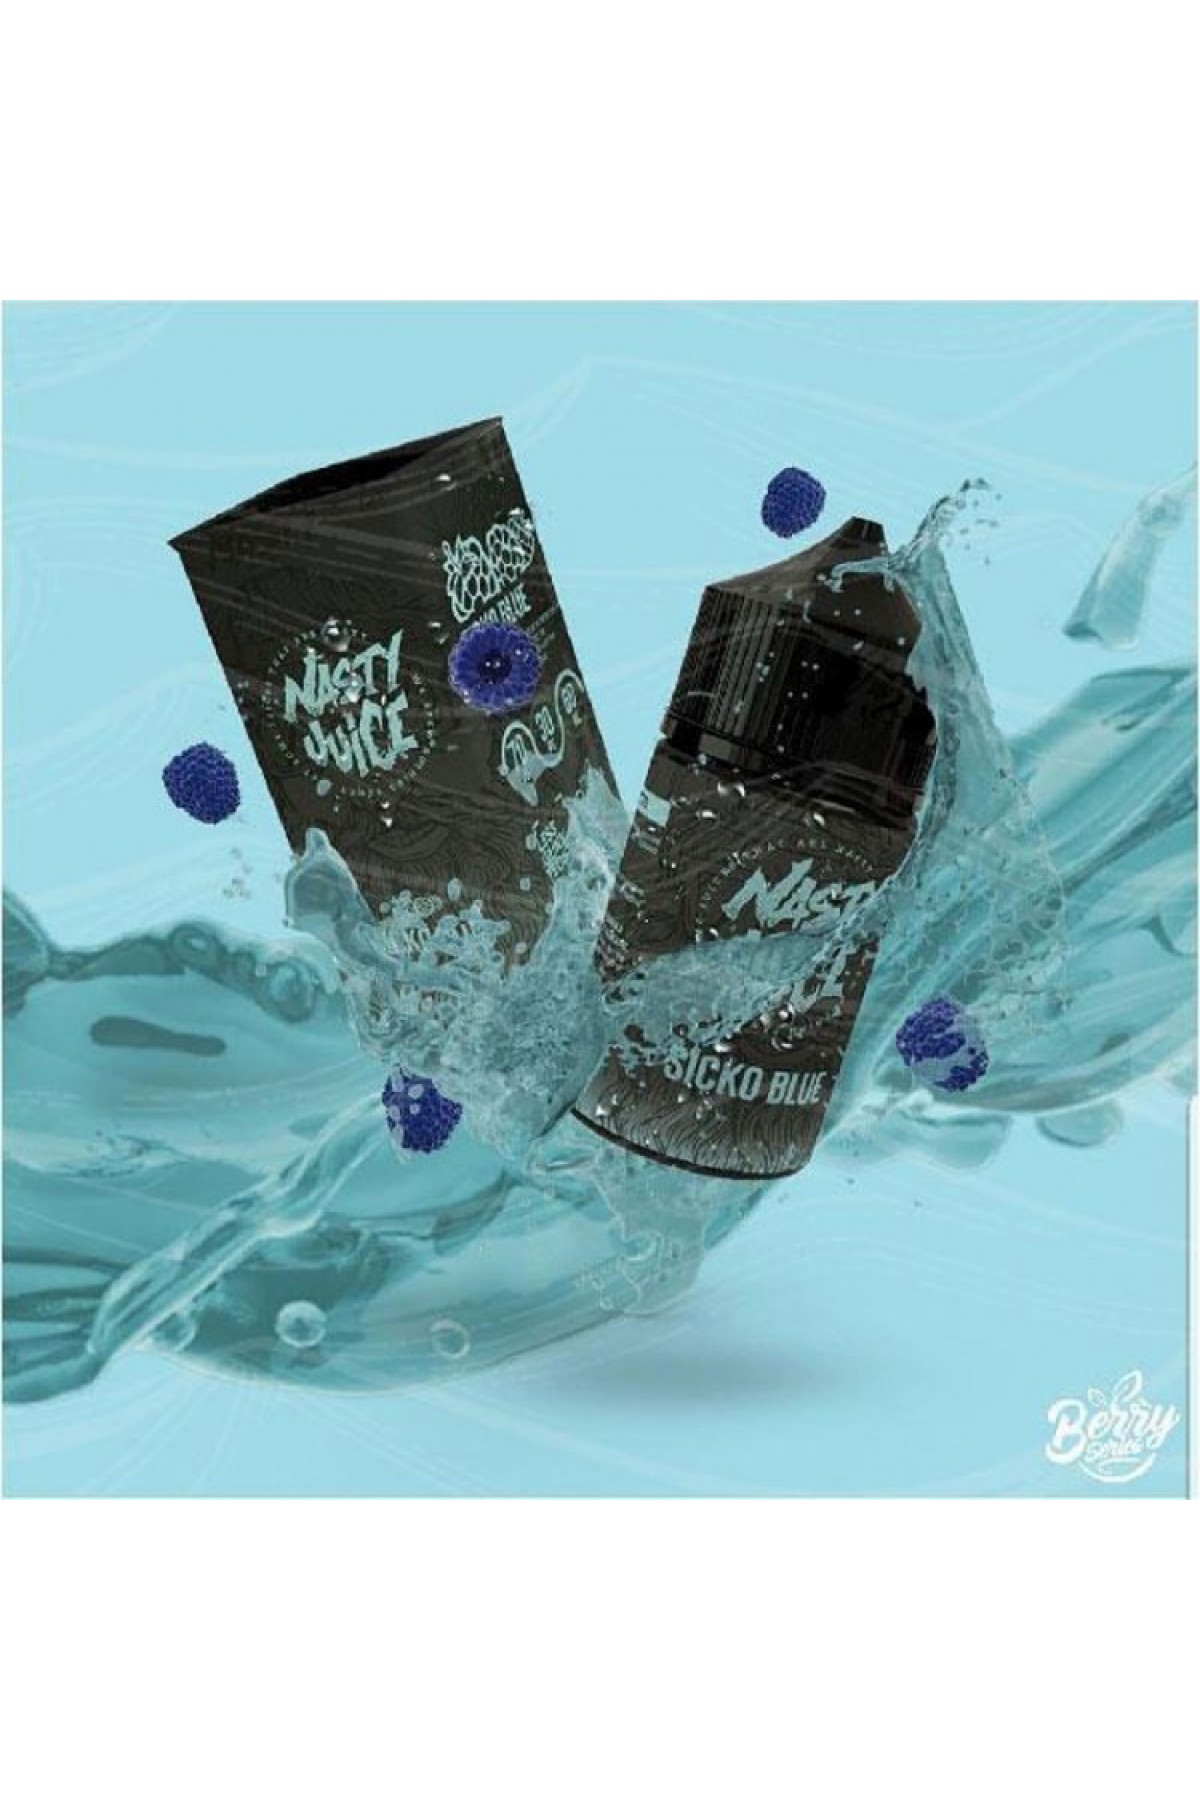 Nasty Juice "Berry Series" Sicko Blue Premium Likit 60ML (Ahududu, Hafif Nane)